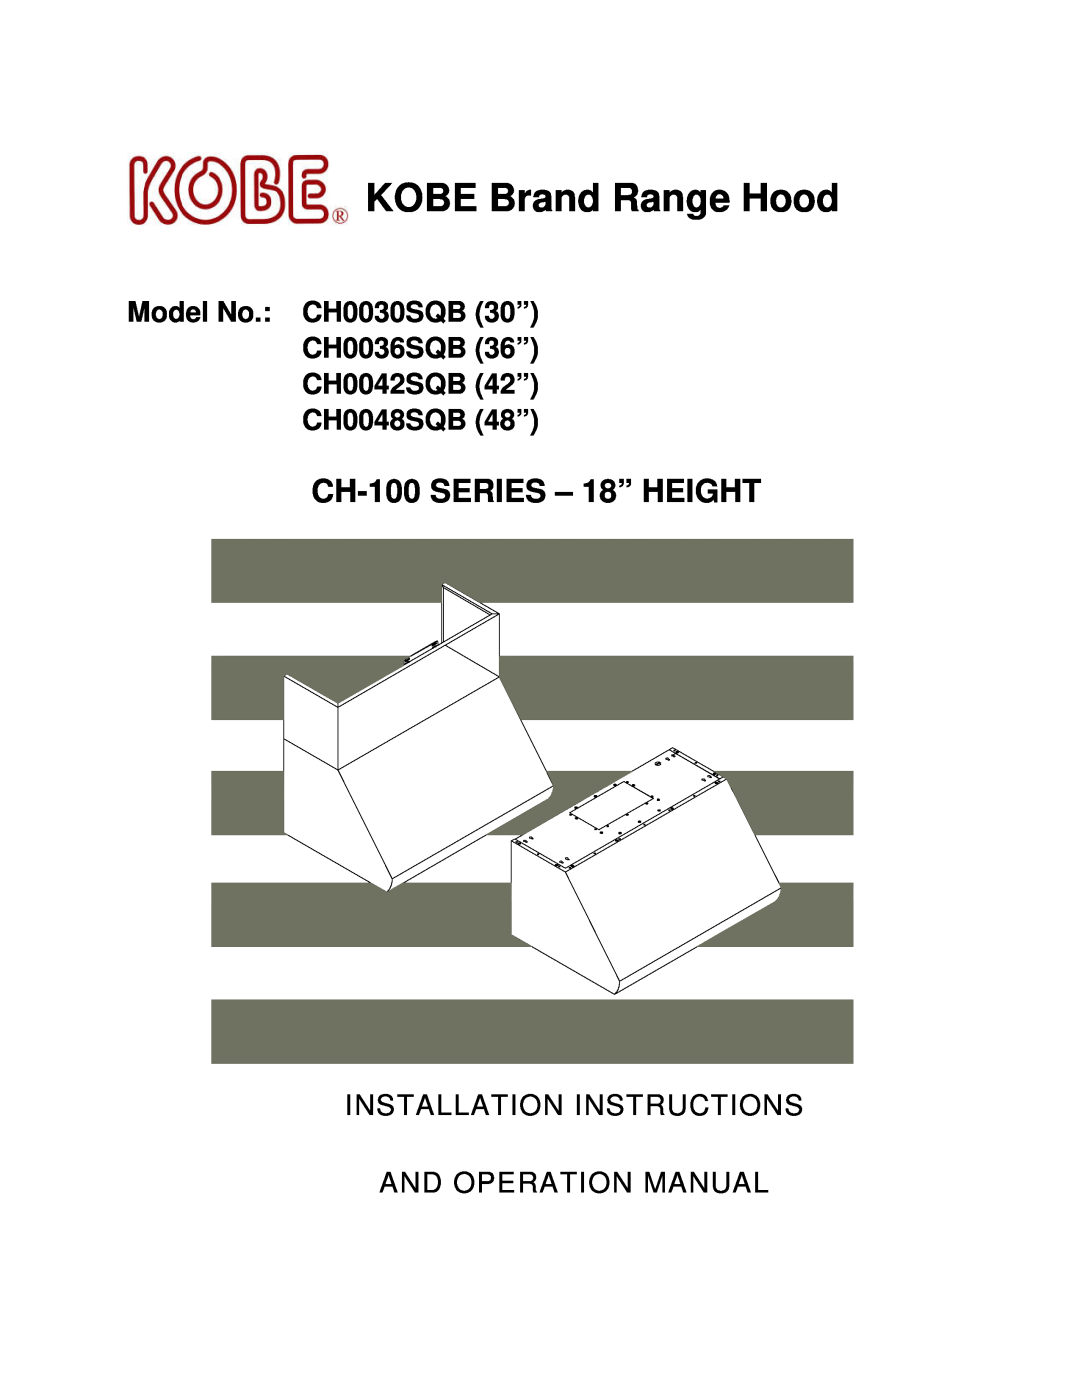 Kobe Range Hoods CH0030SQB (30"), CH0036SQB (36") manual Model No. CH0030SQB 30” CH0036SQB 36” CH0042SQB 42” CH0048SQB 48” 